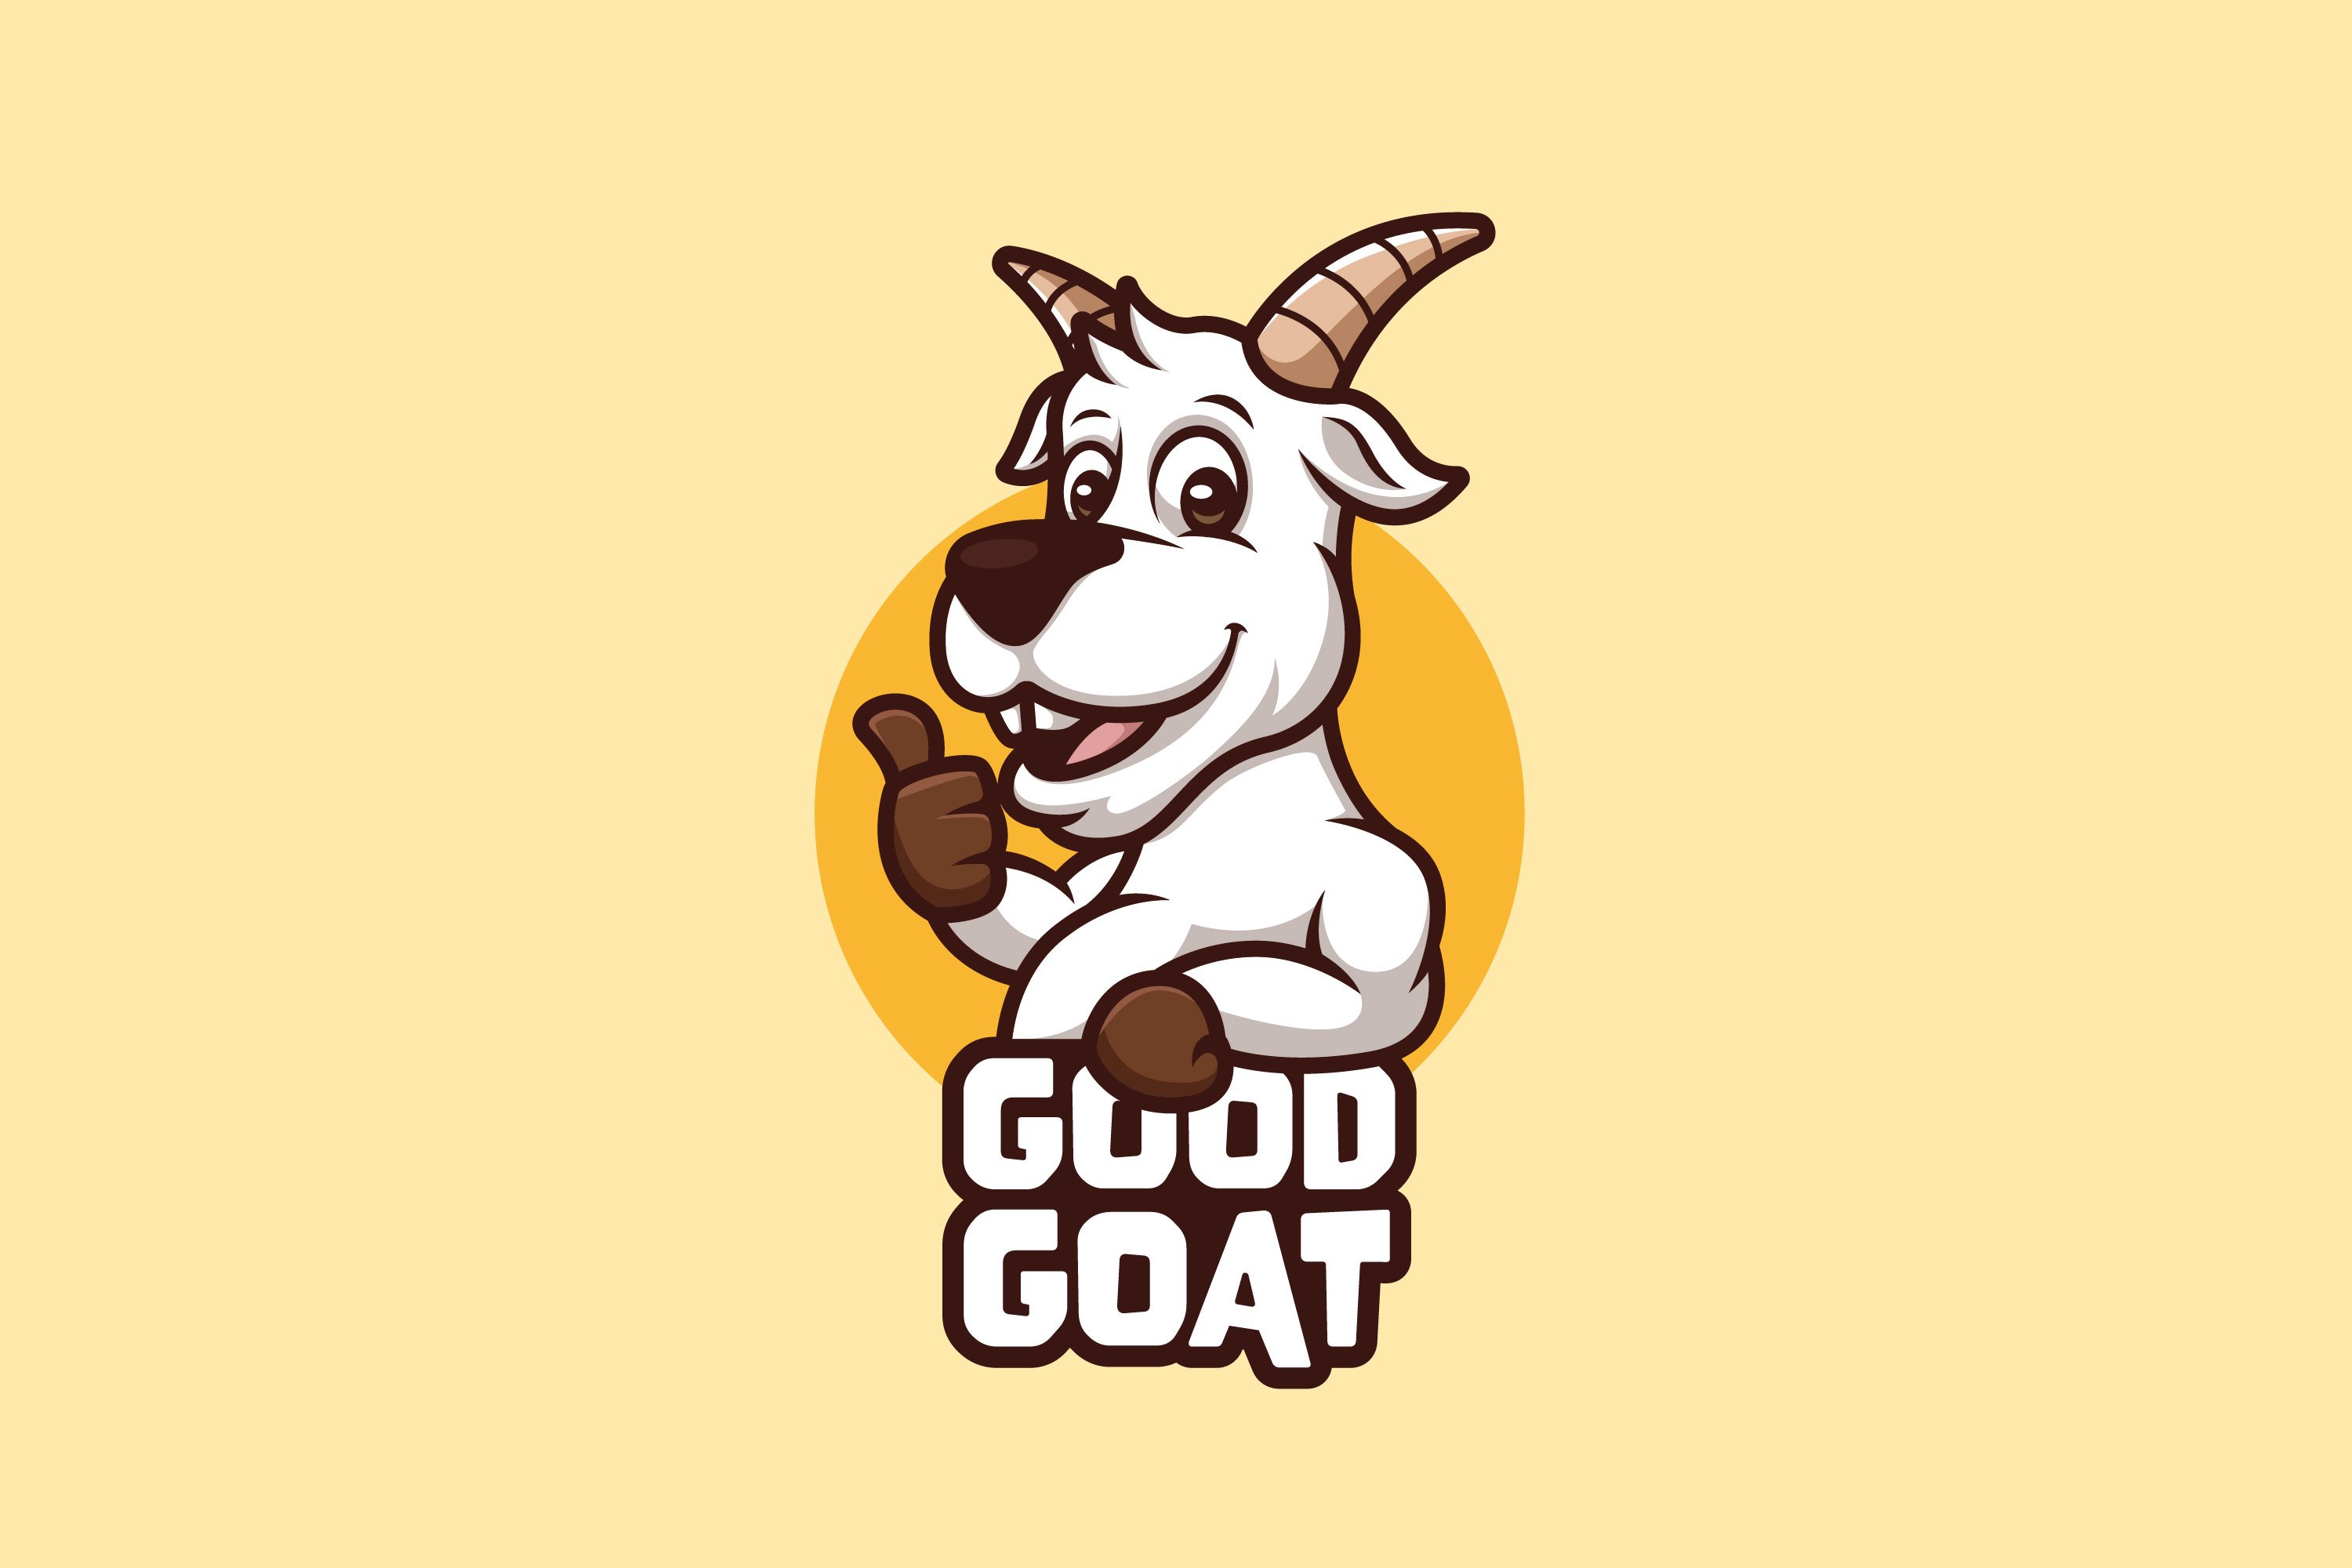 Goat Cartoon Logo cover image.